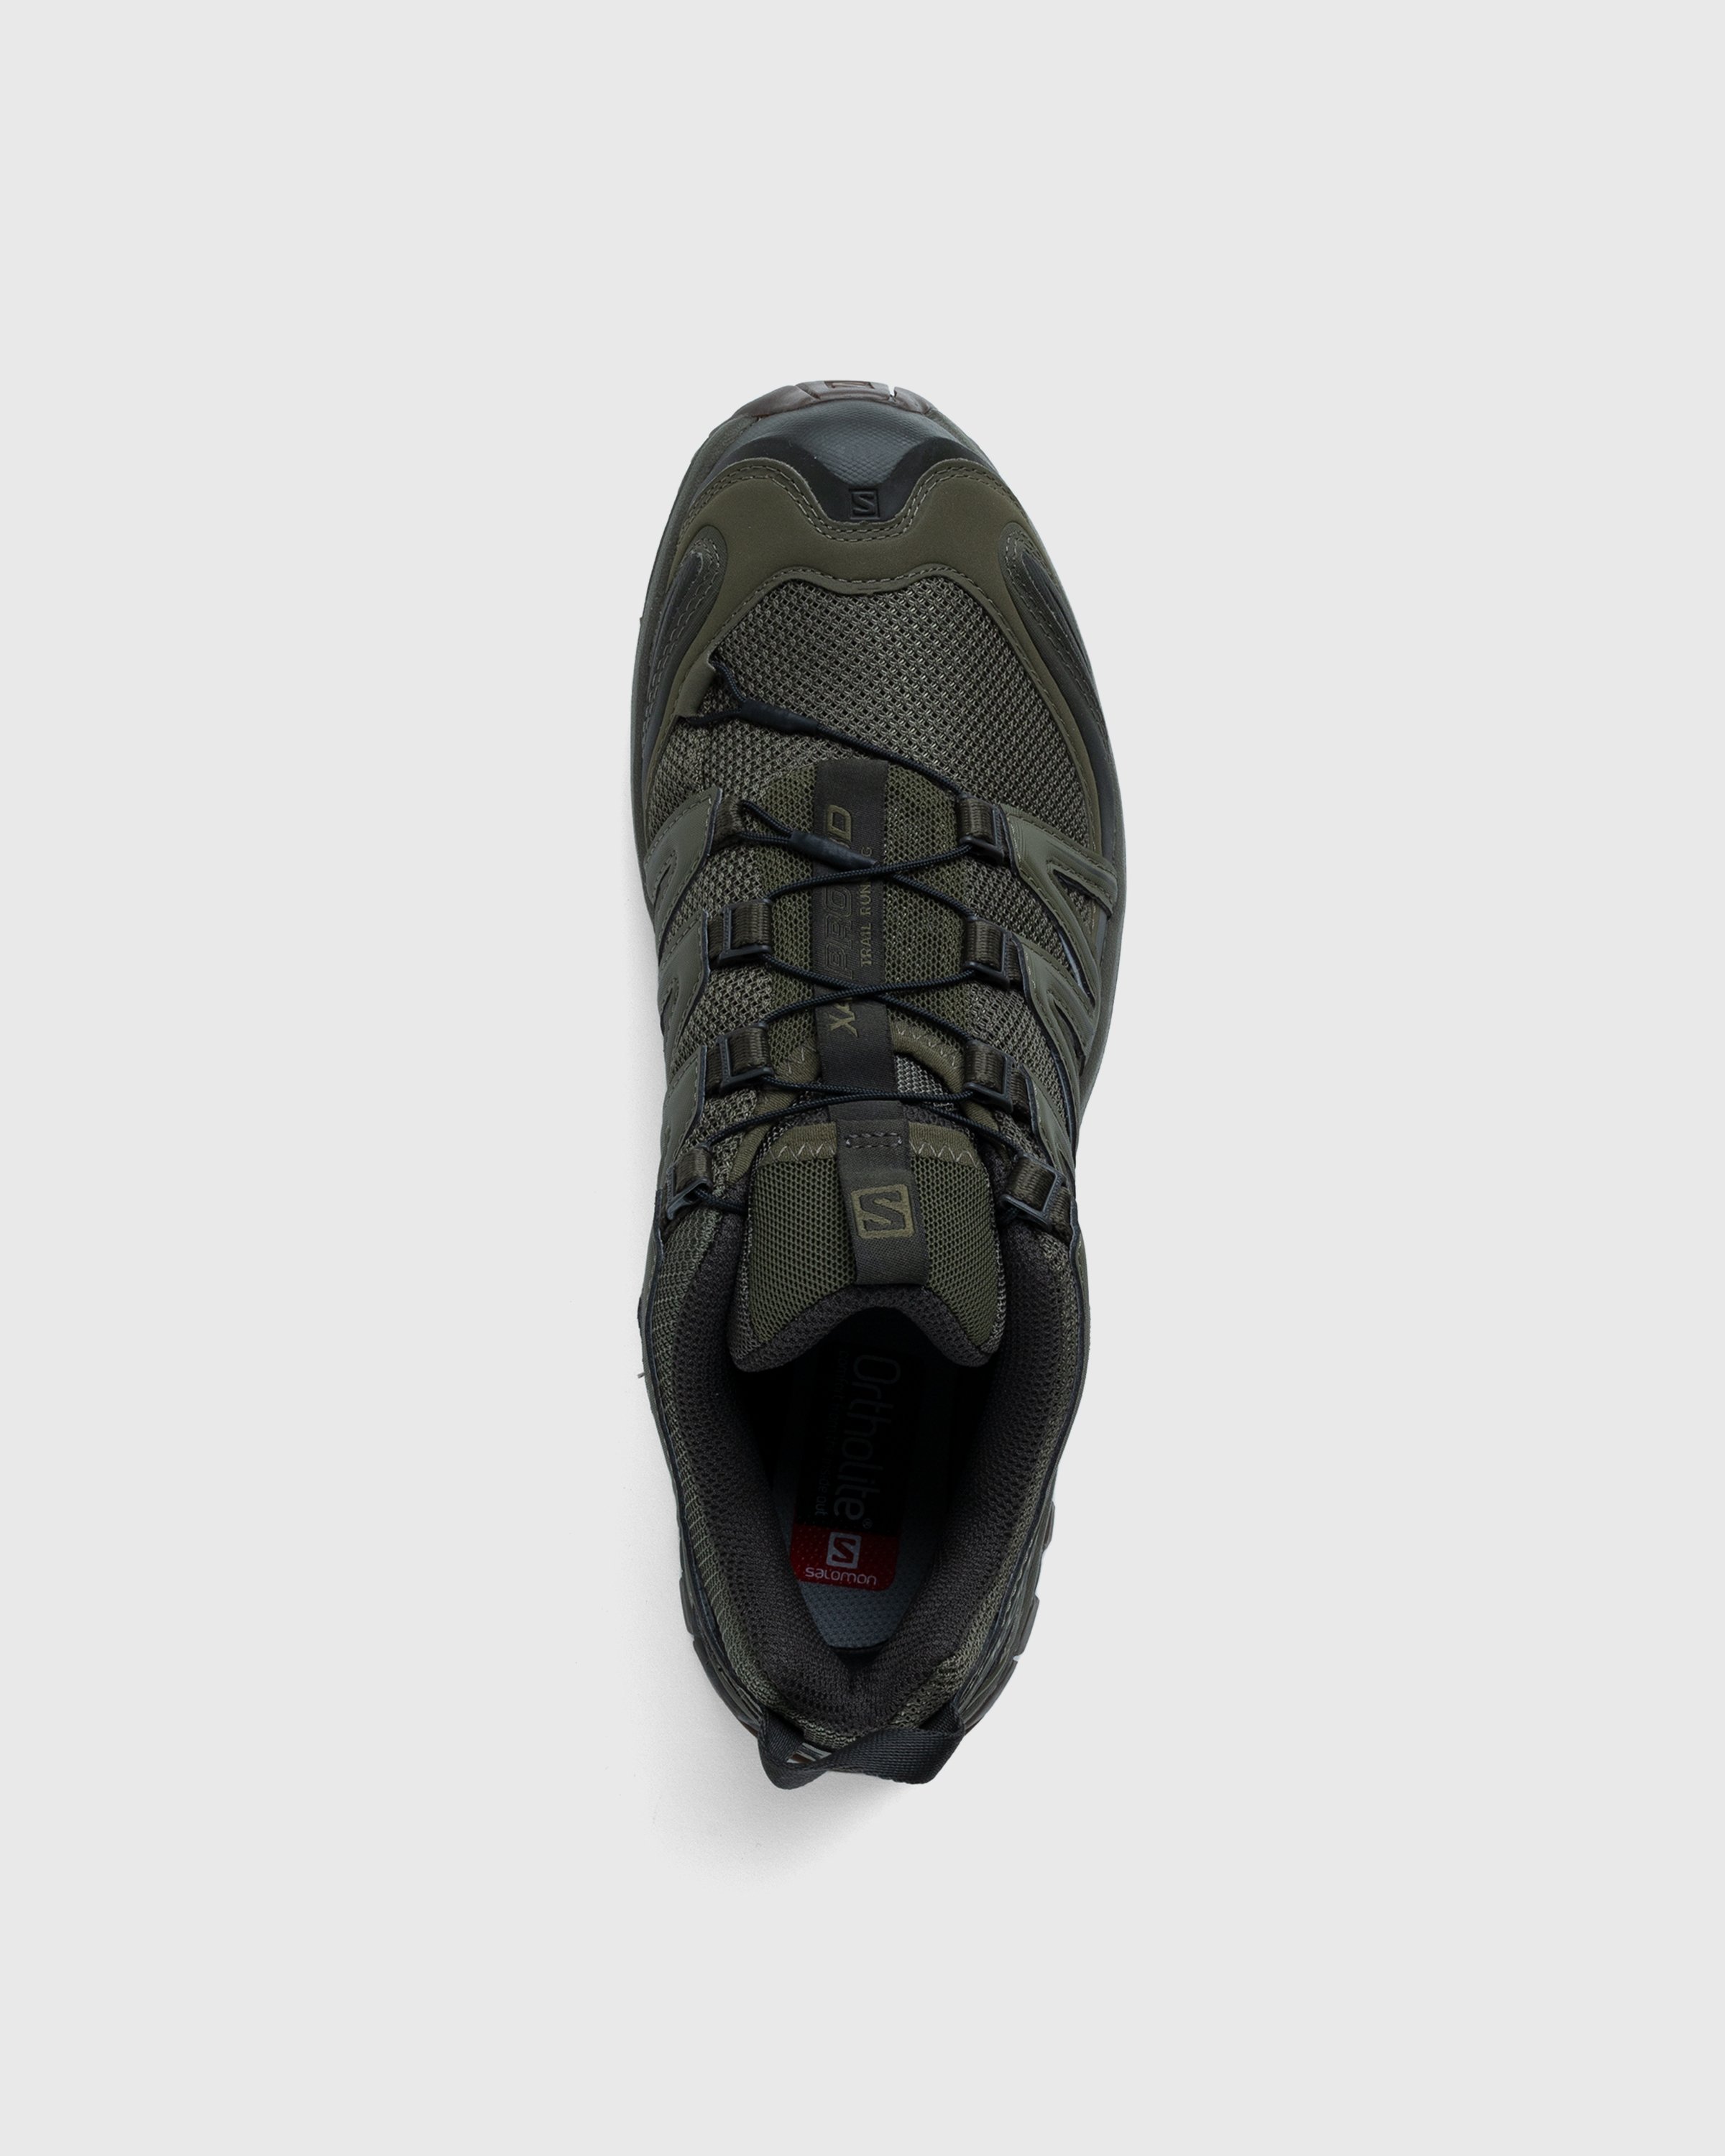 Salomon - XA Pro 3D Olive Night/Peat - Footwear - Black - Image 5